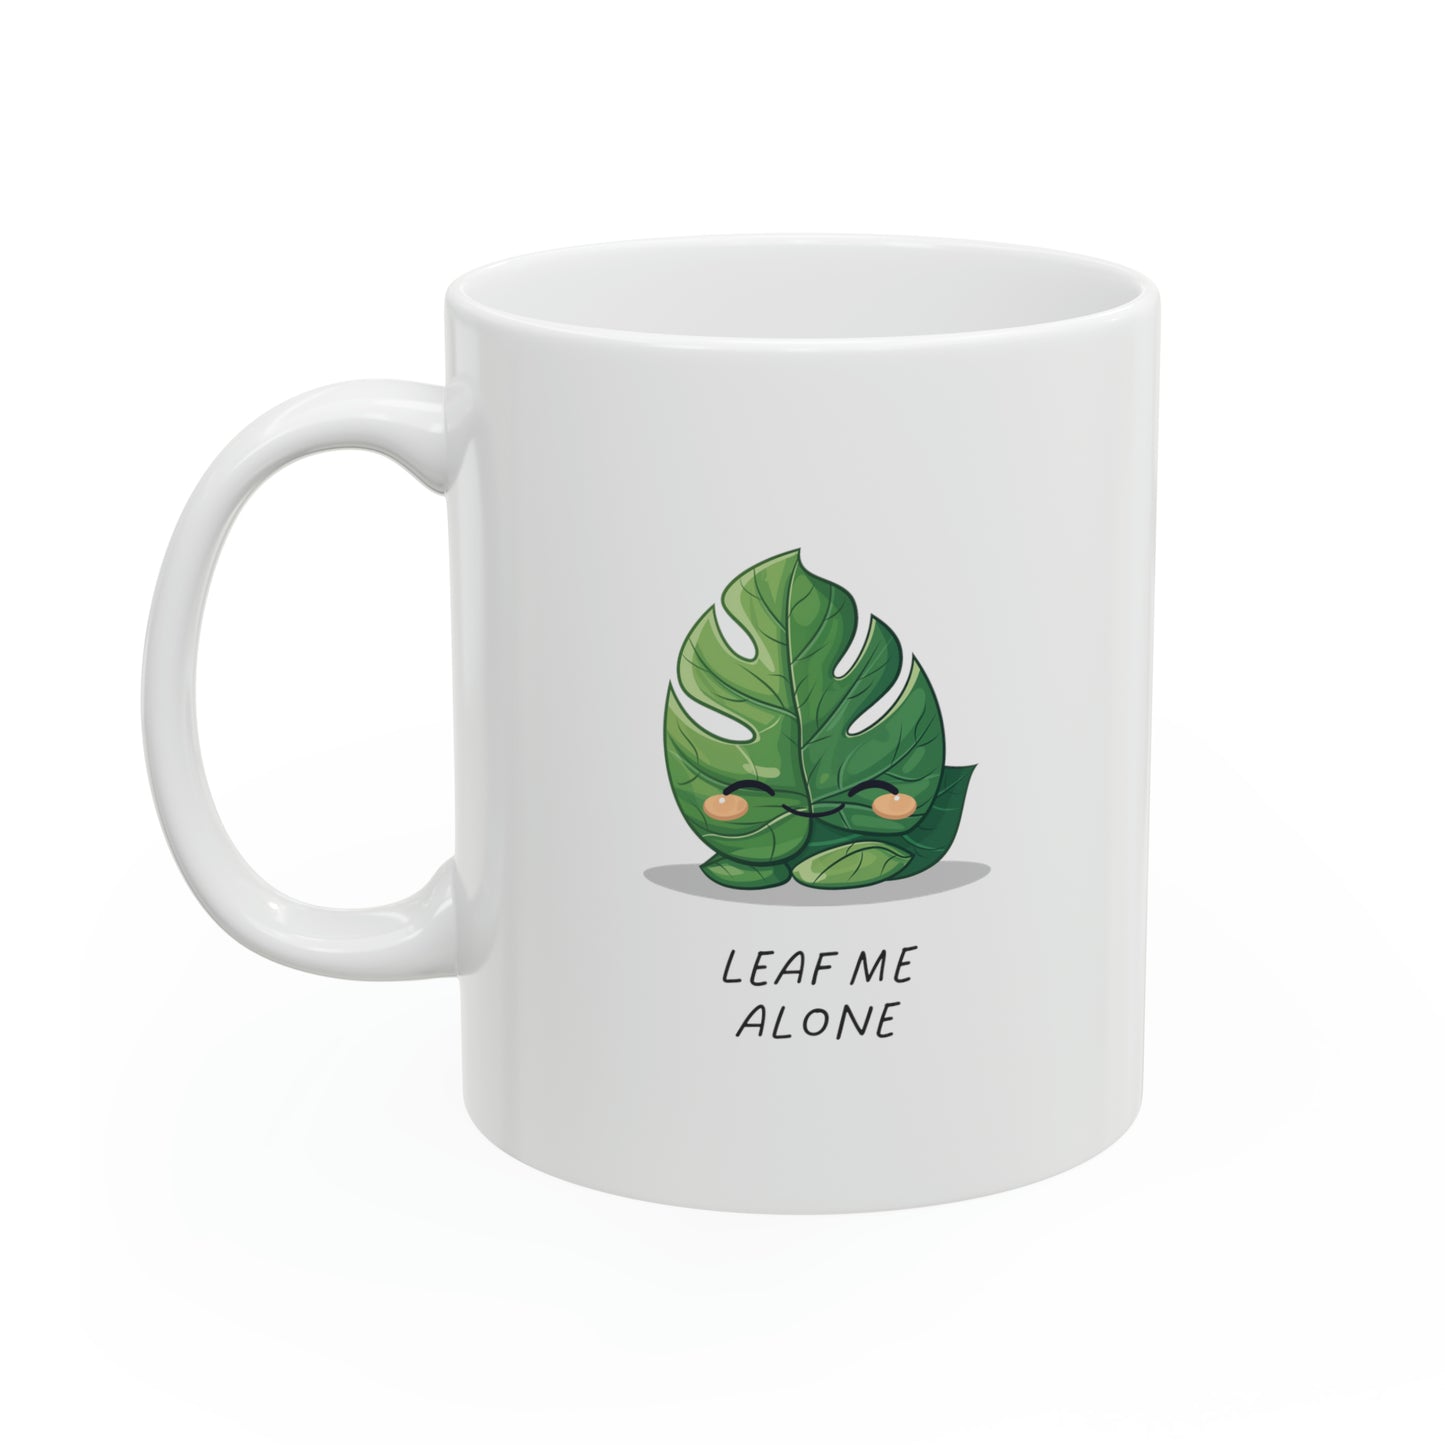 "Leaf me alone" Coffee Mug - Monstera Version